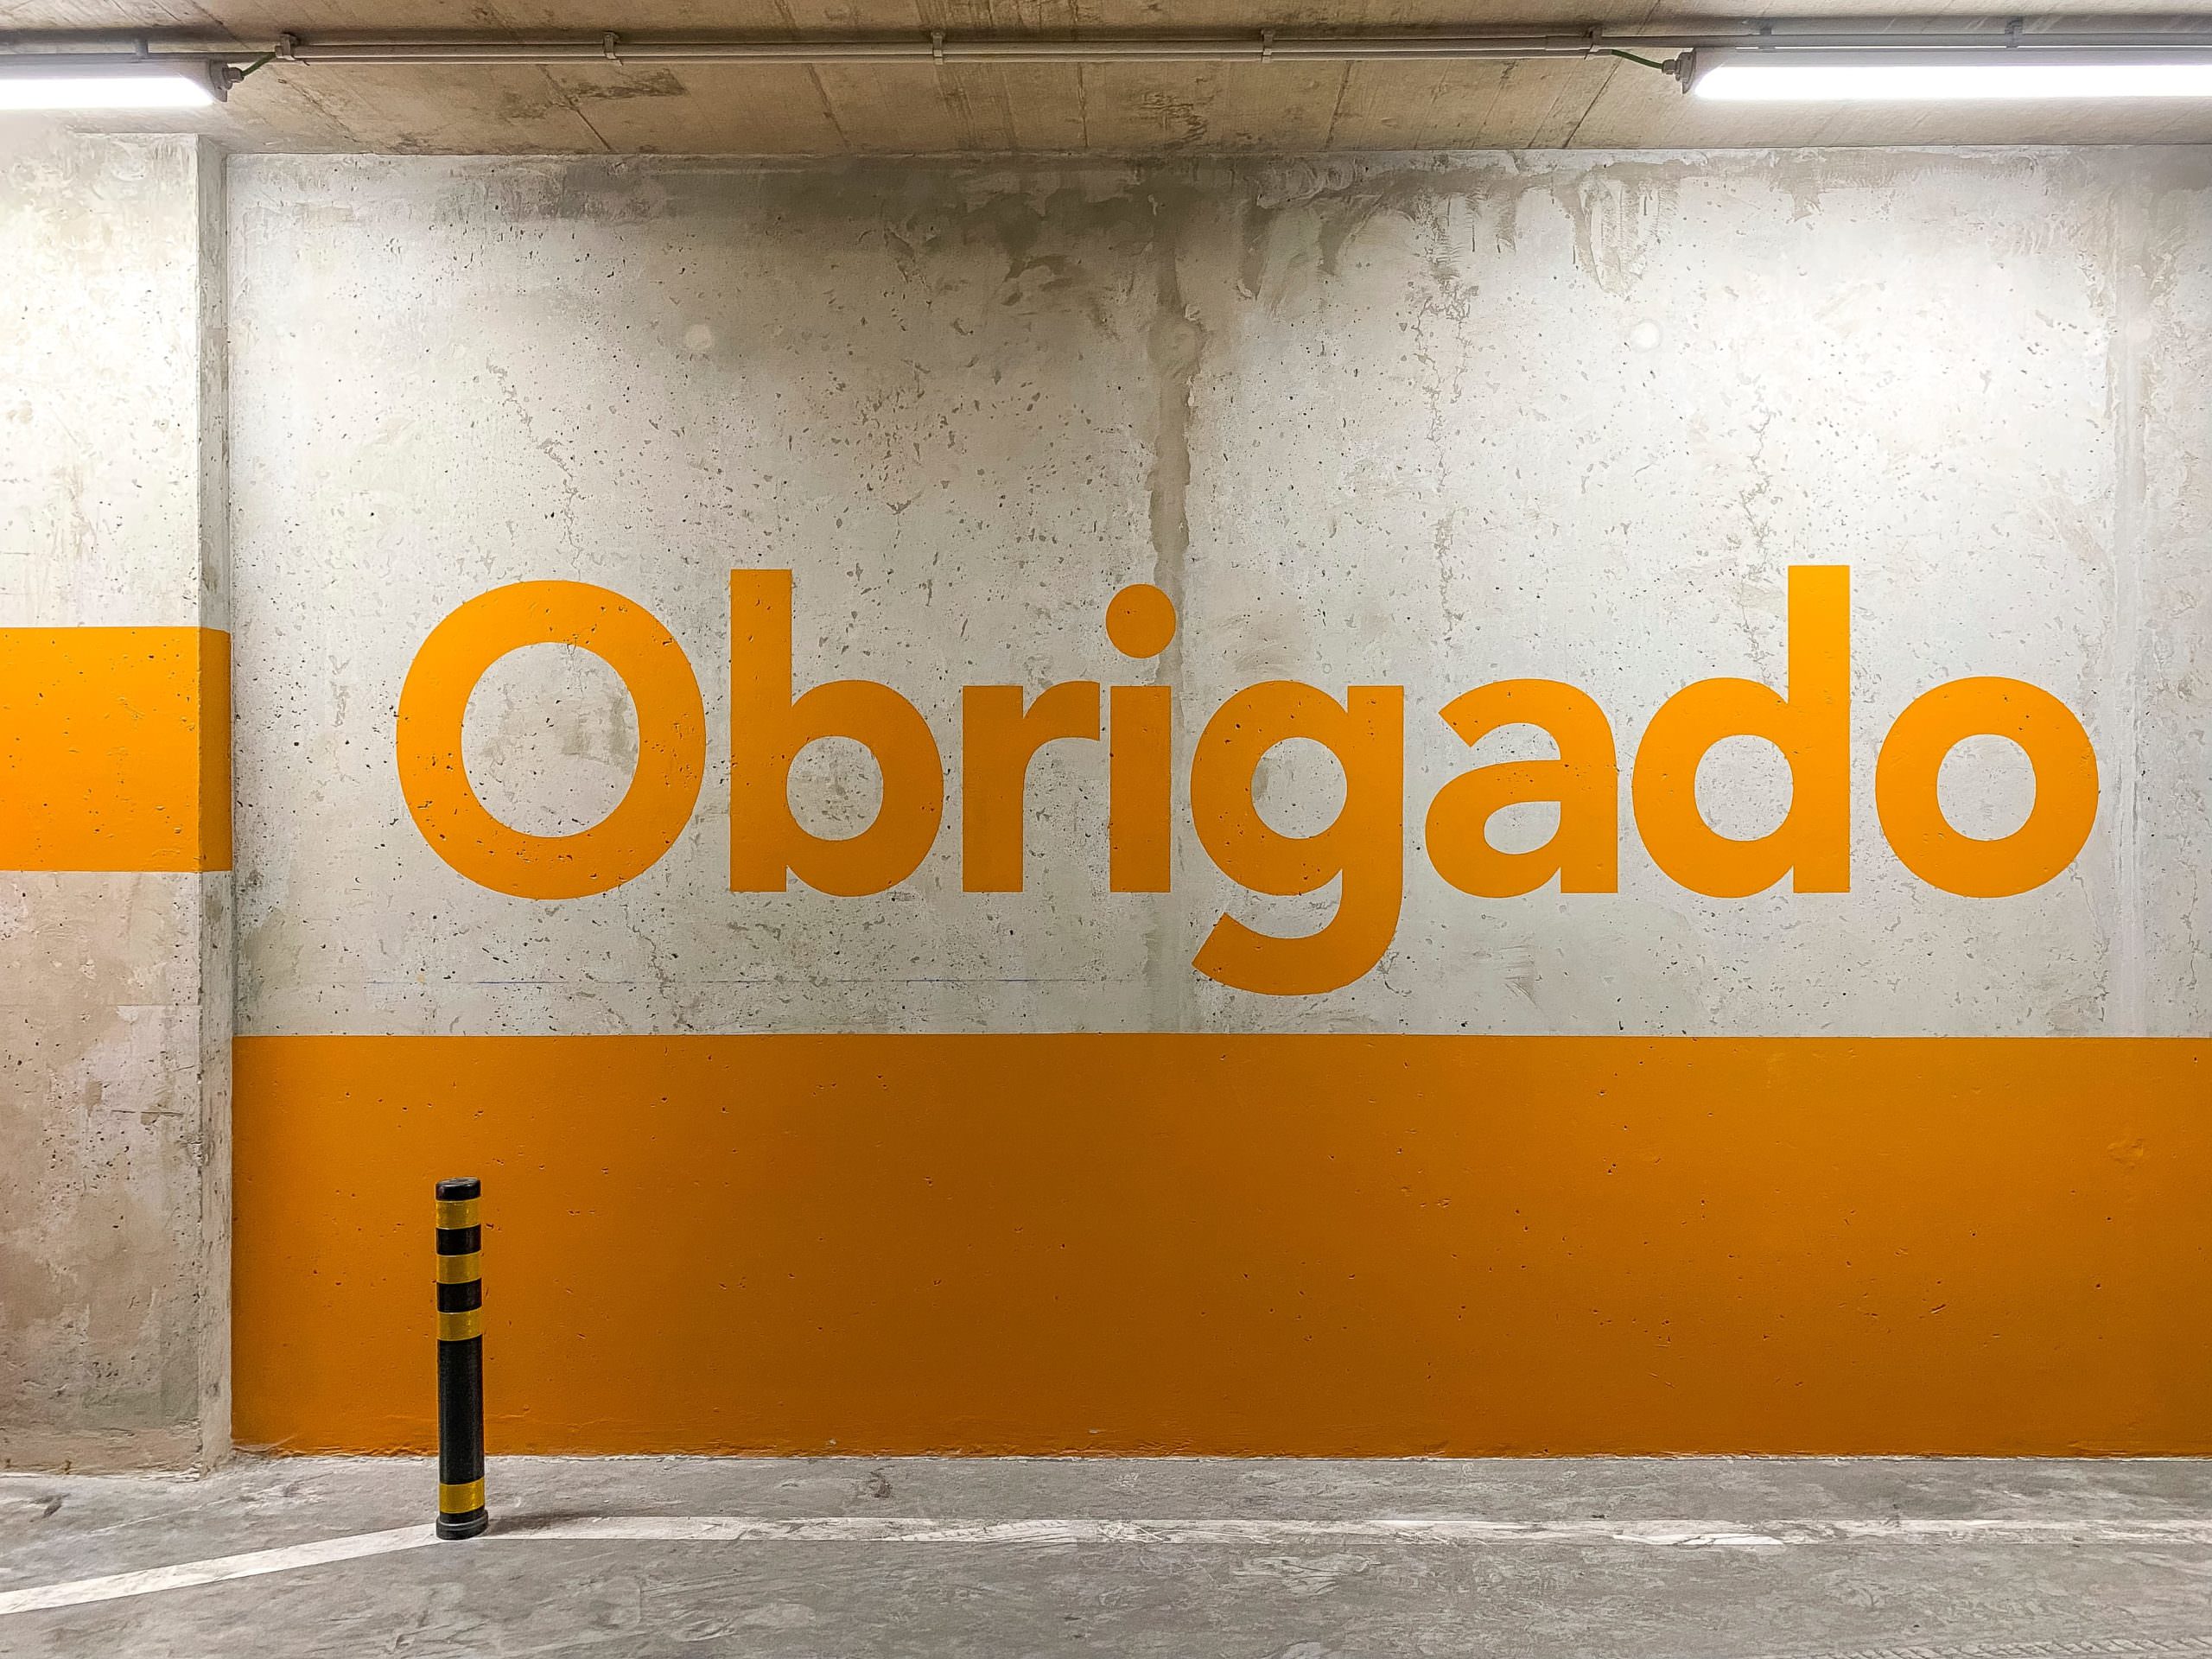 wall with big text "Obrigado"